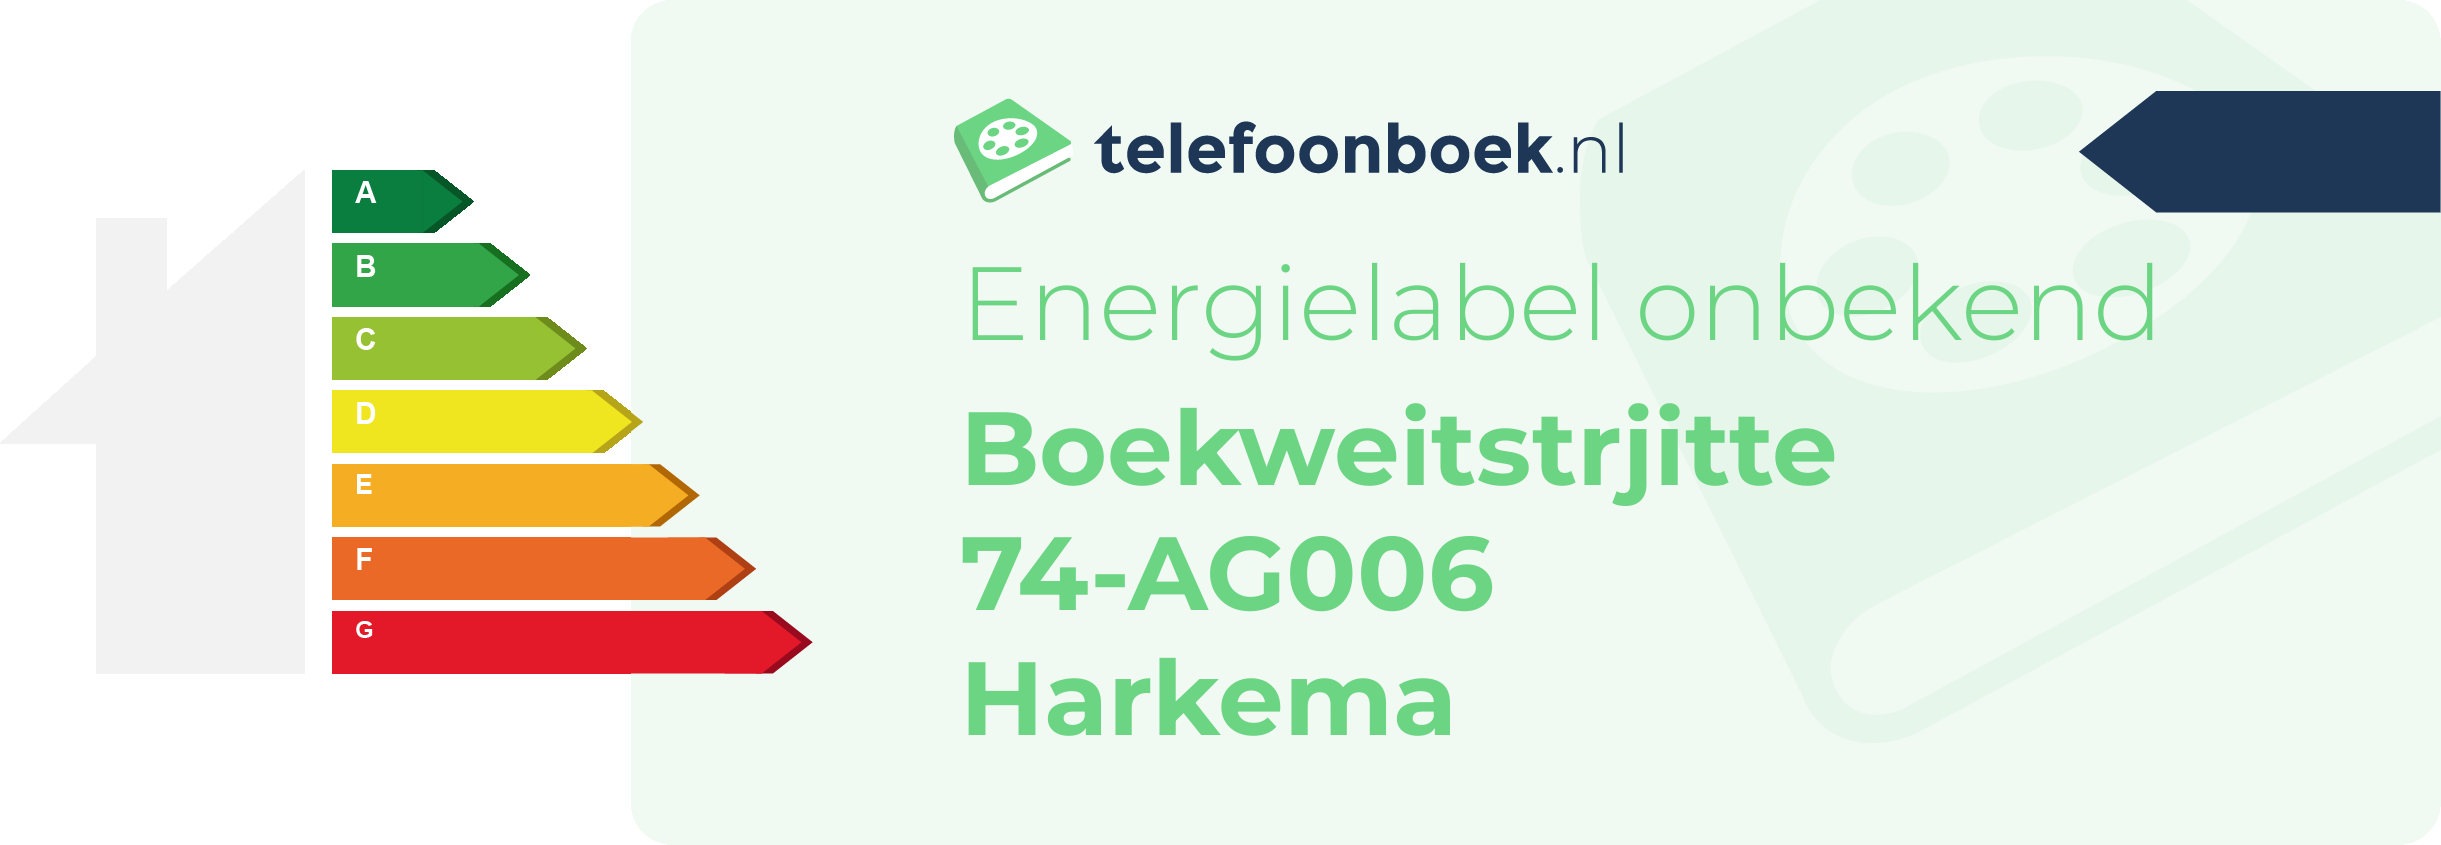 Energielabel Boekweitstrjitte 74-AG006 Harkema